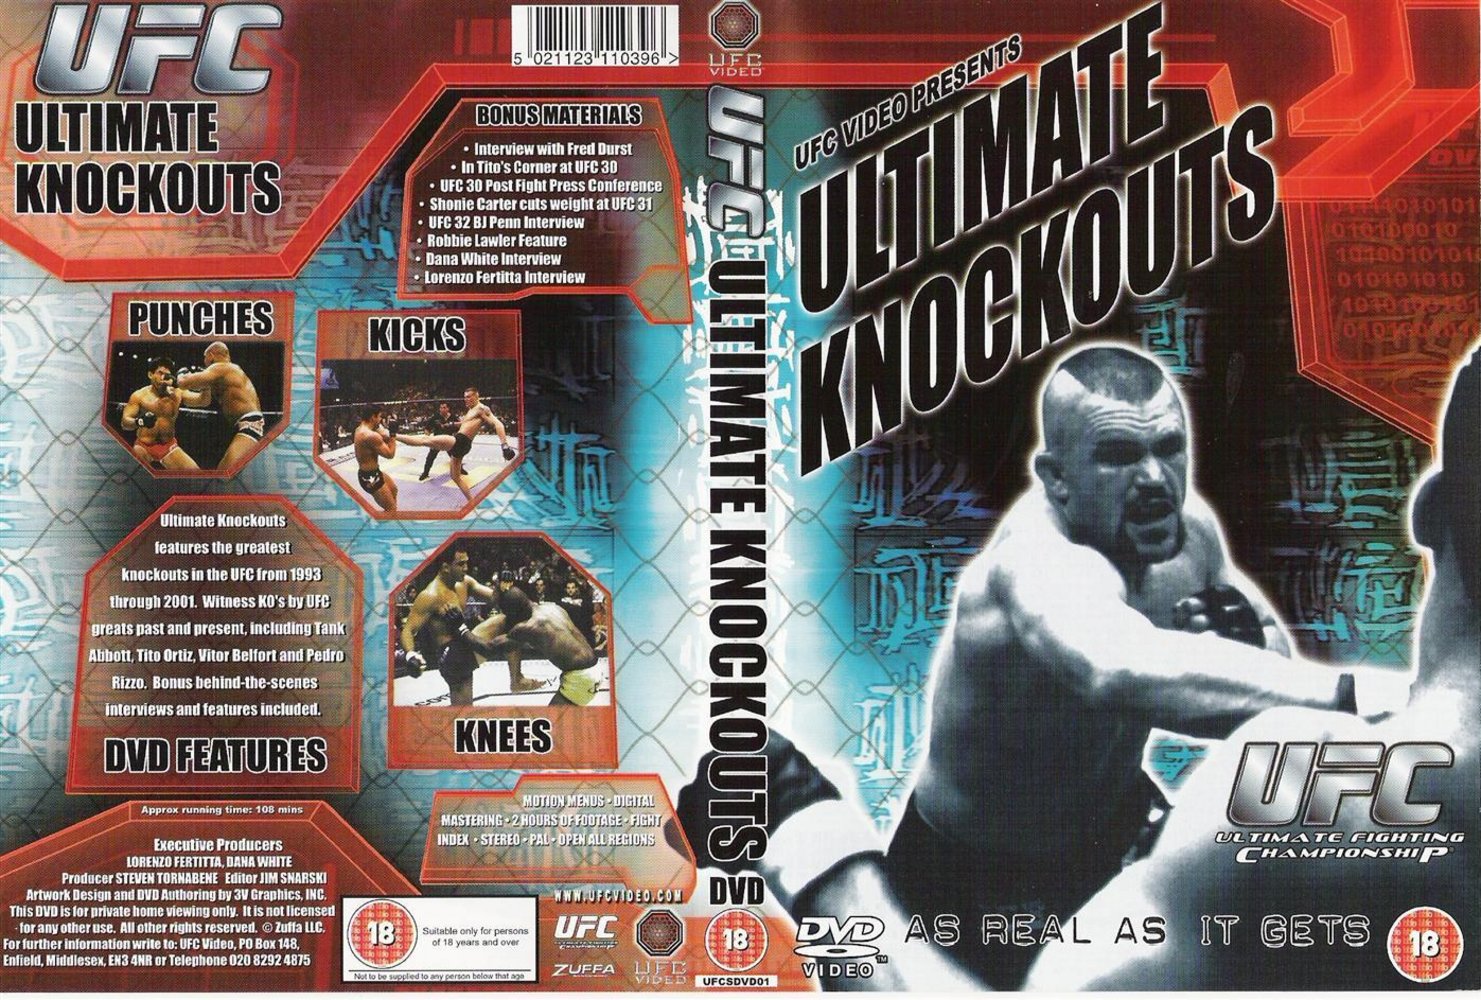 Jaquette DVD Ufc Ultimate Knockouts